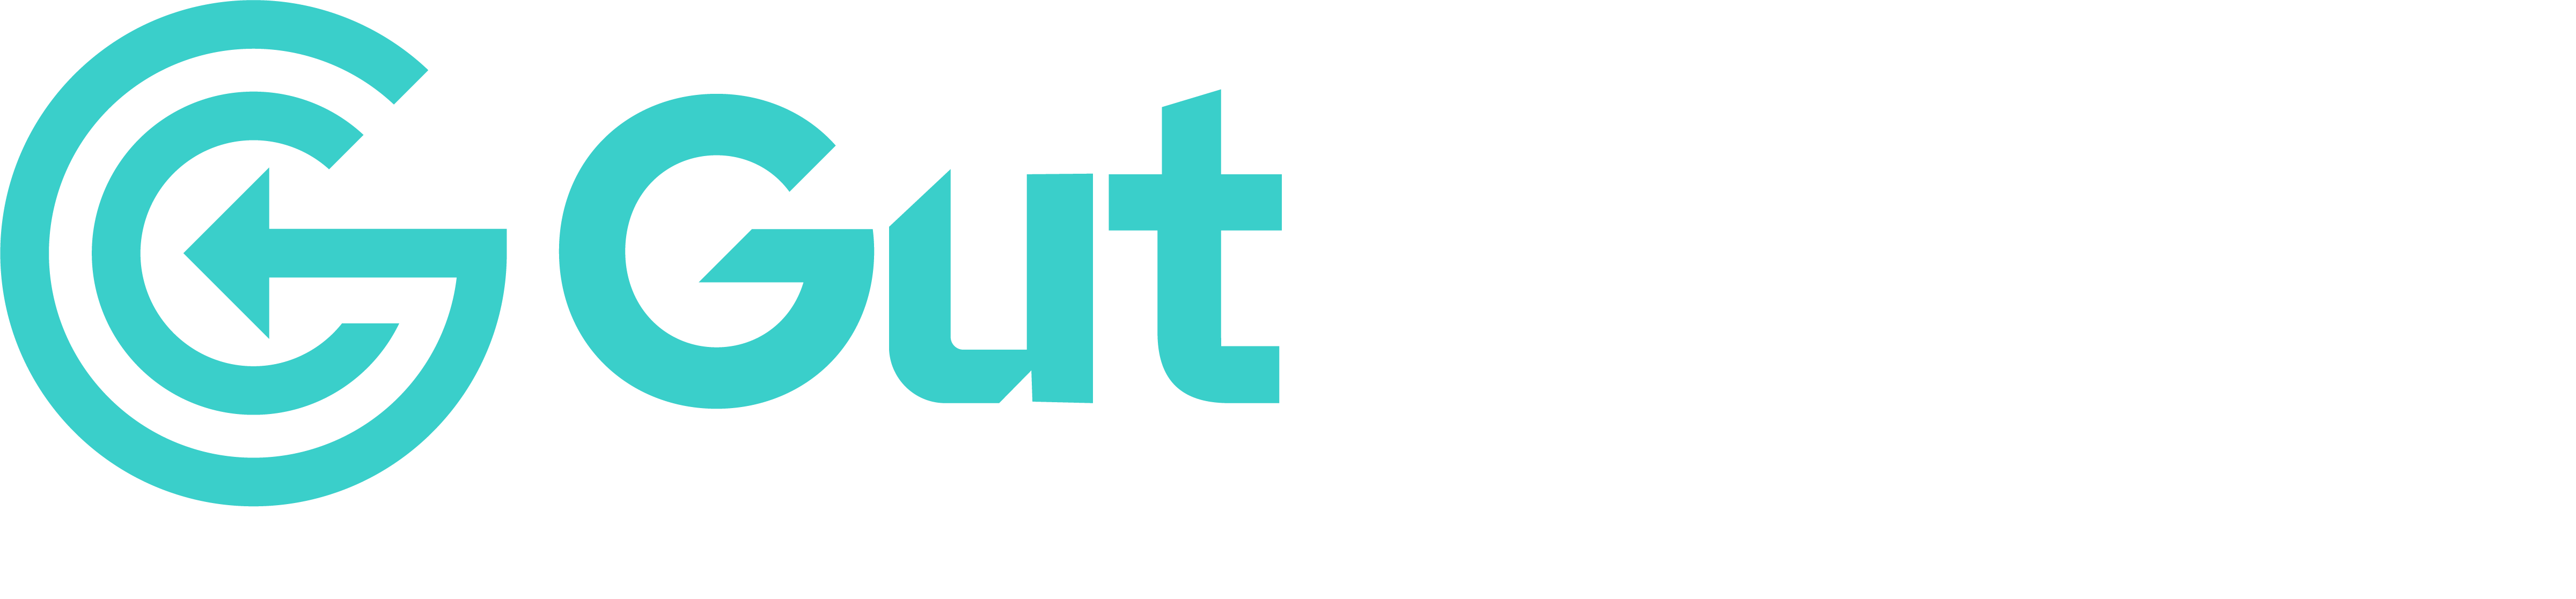 GutCheck A Toluna Company Logo